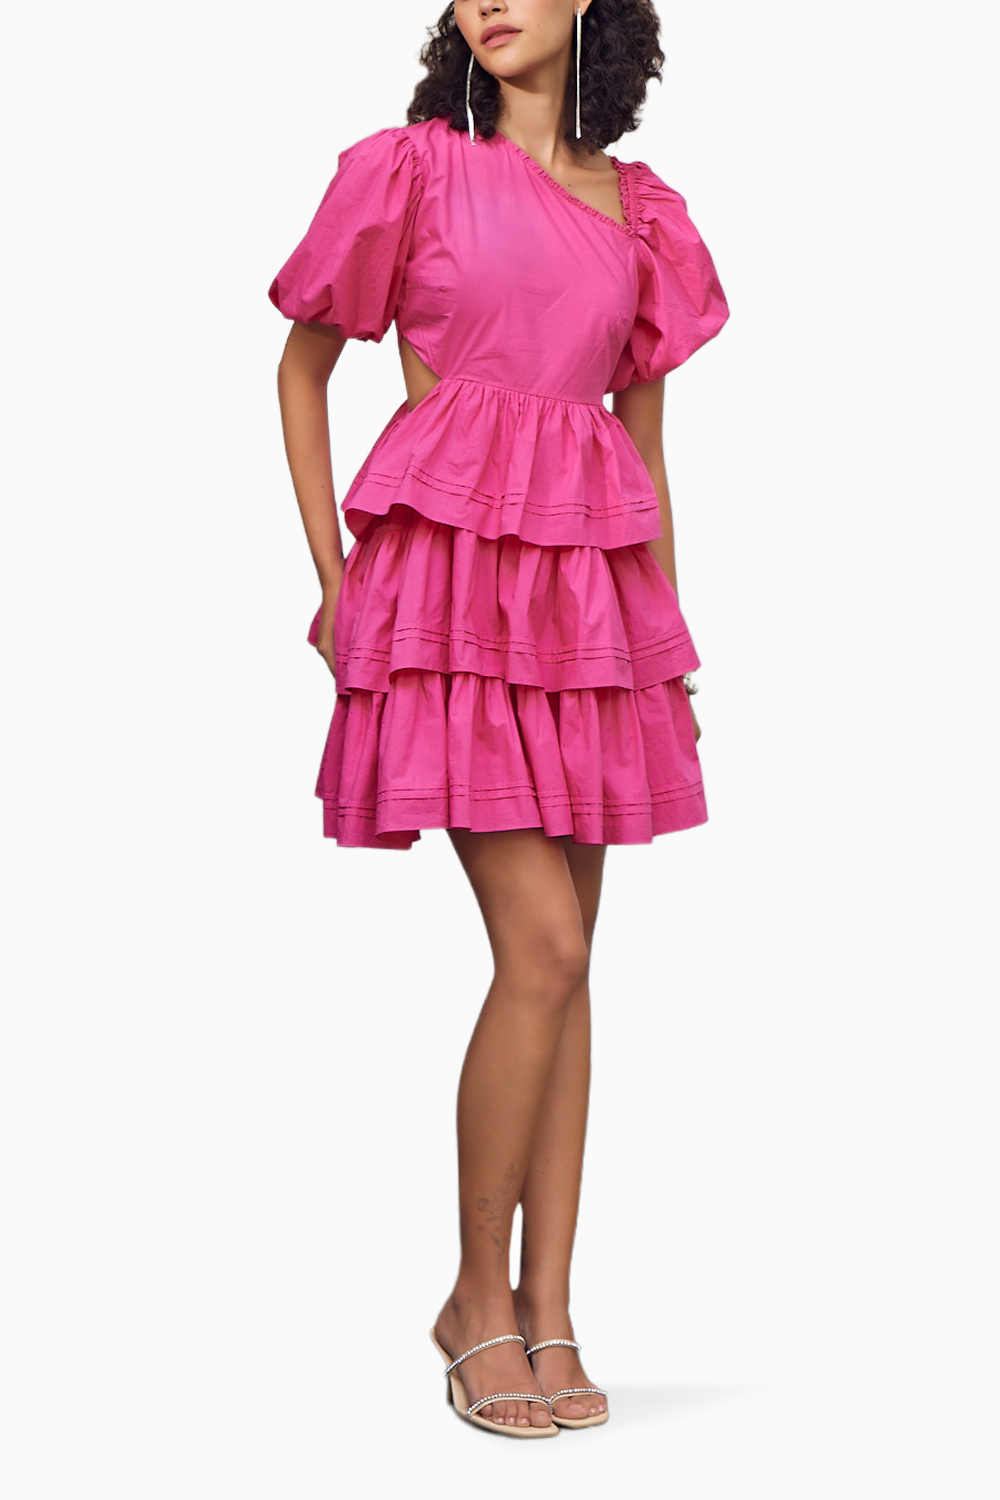 Encelia Pink Tiered Mini Dress